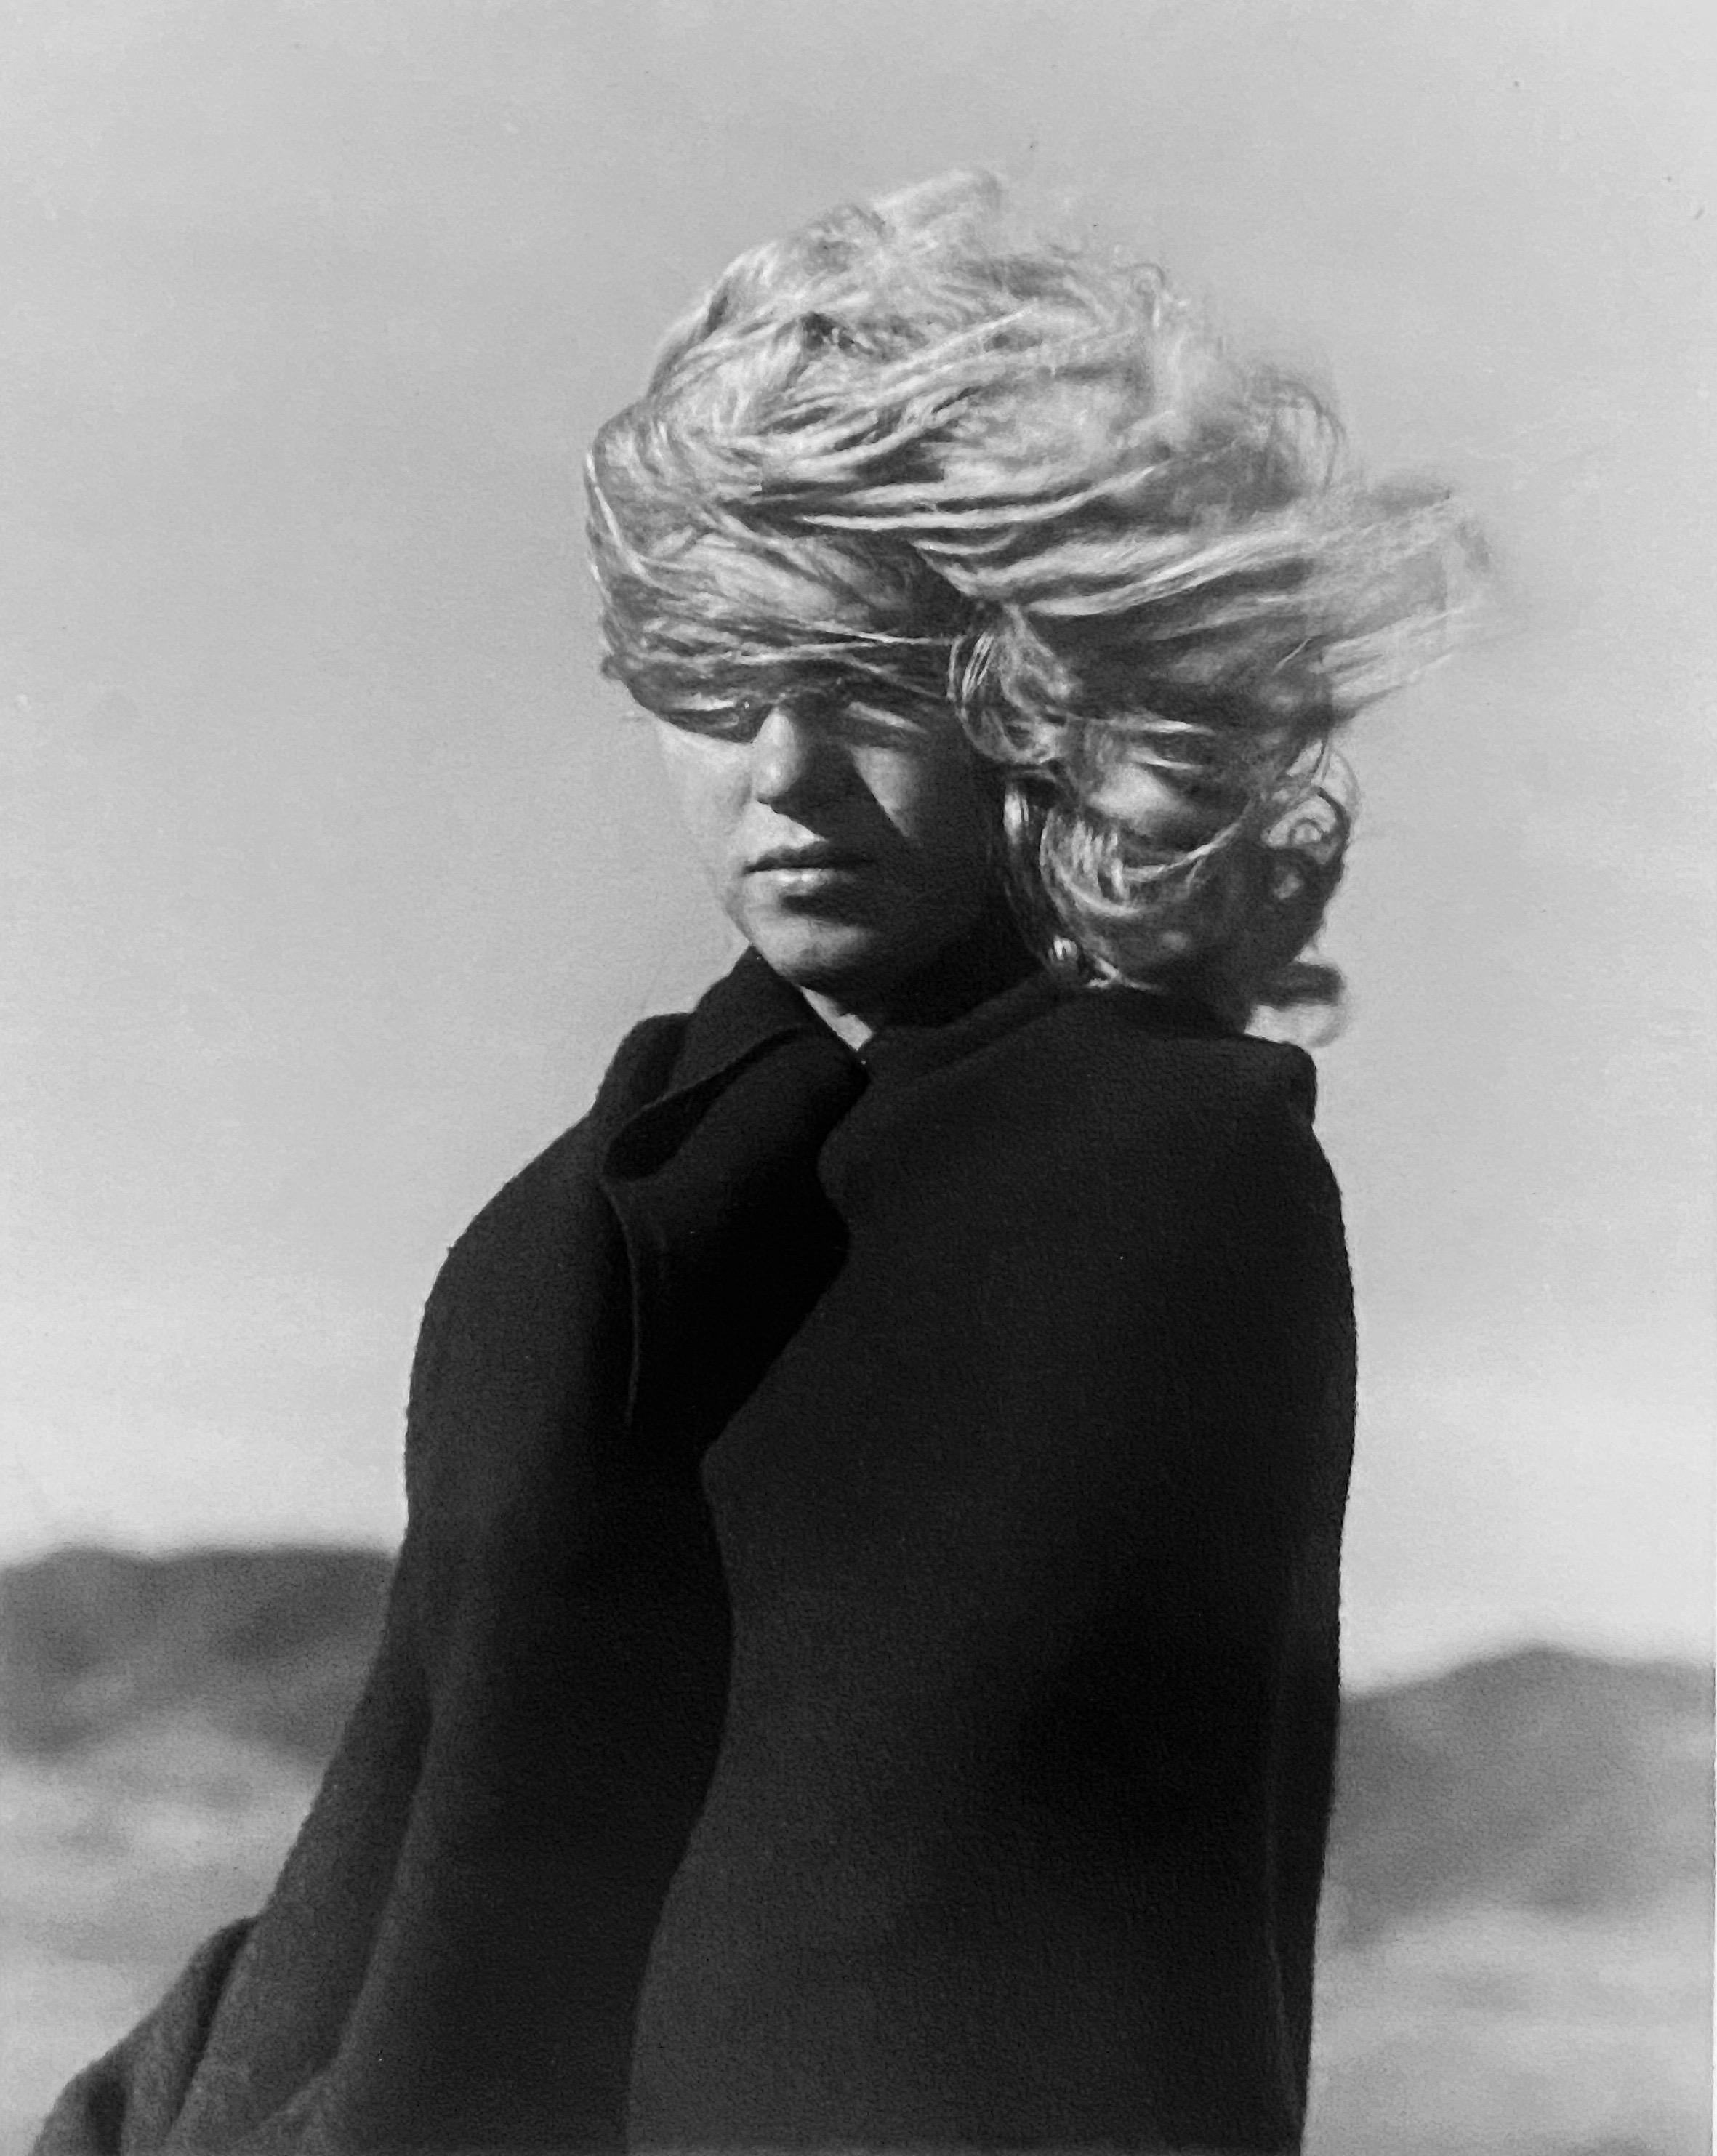 Andre de Dienes Black and White Photograph - Marilyn Monroe, Malibu